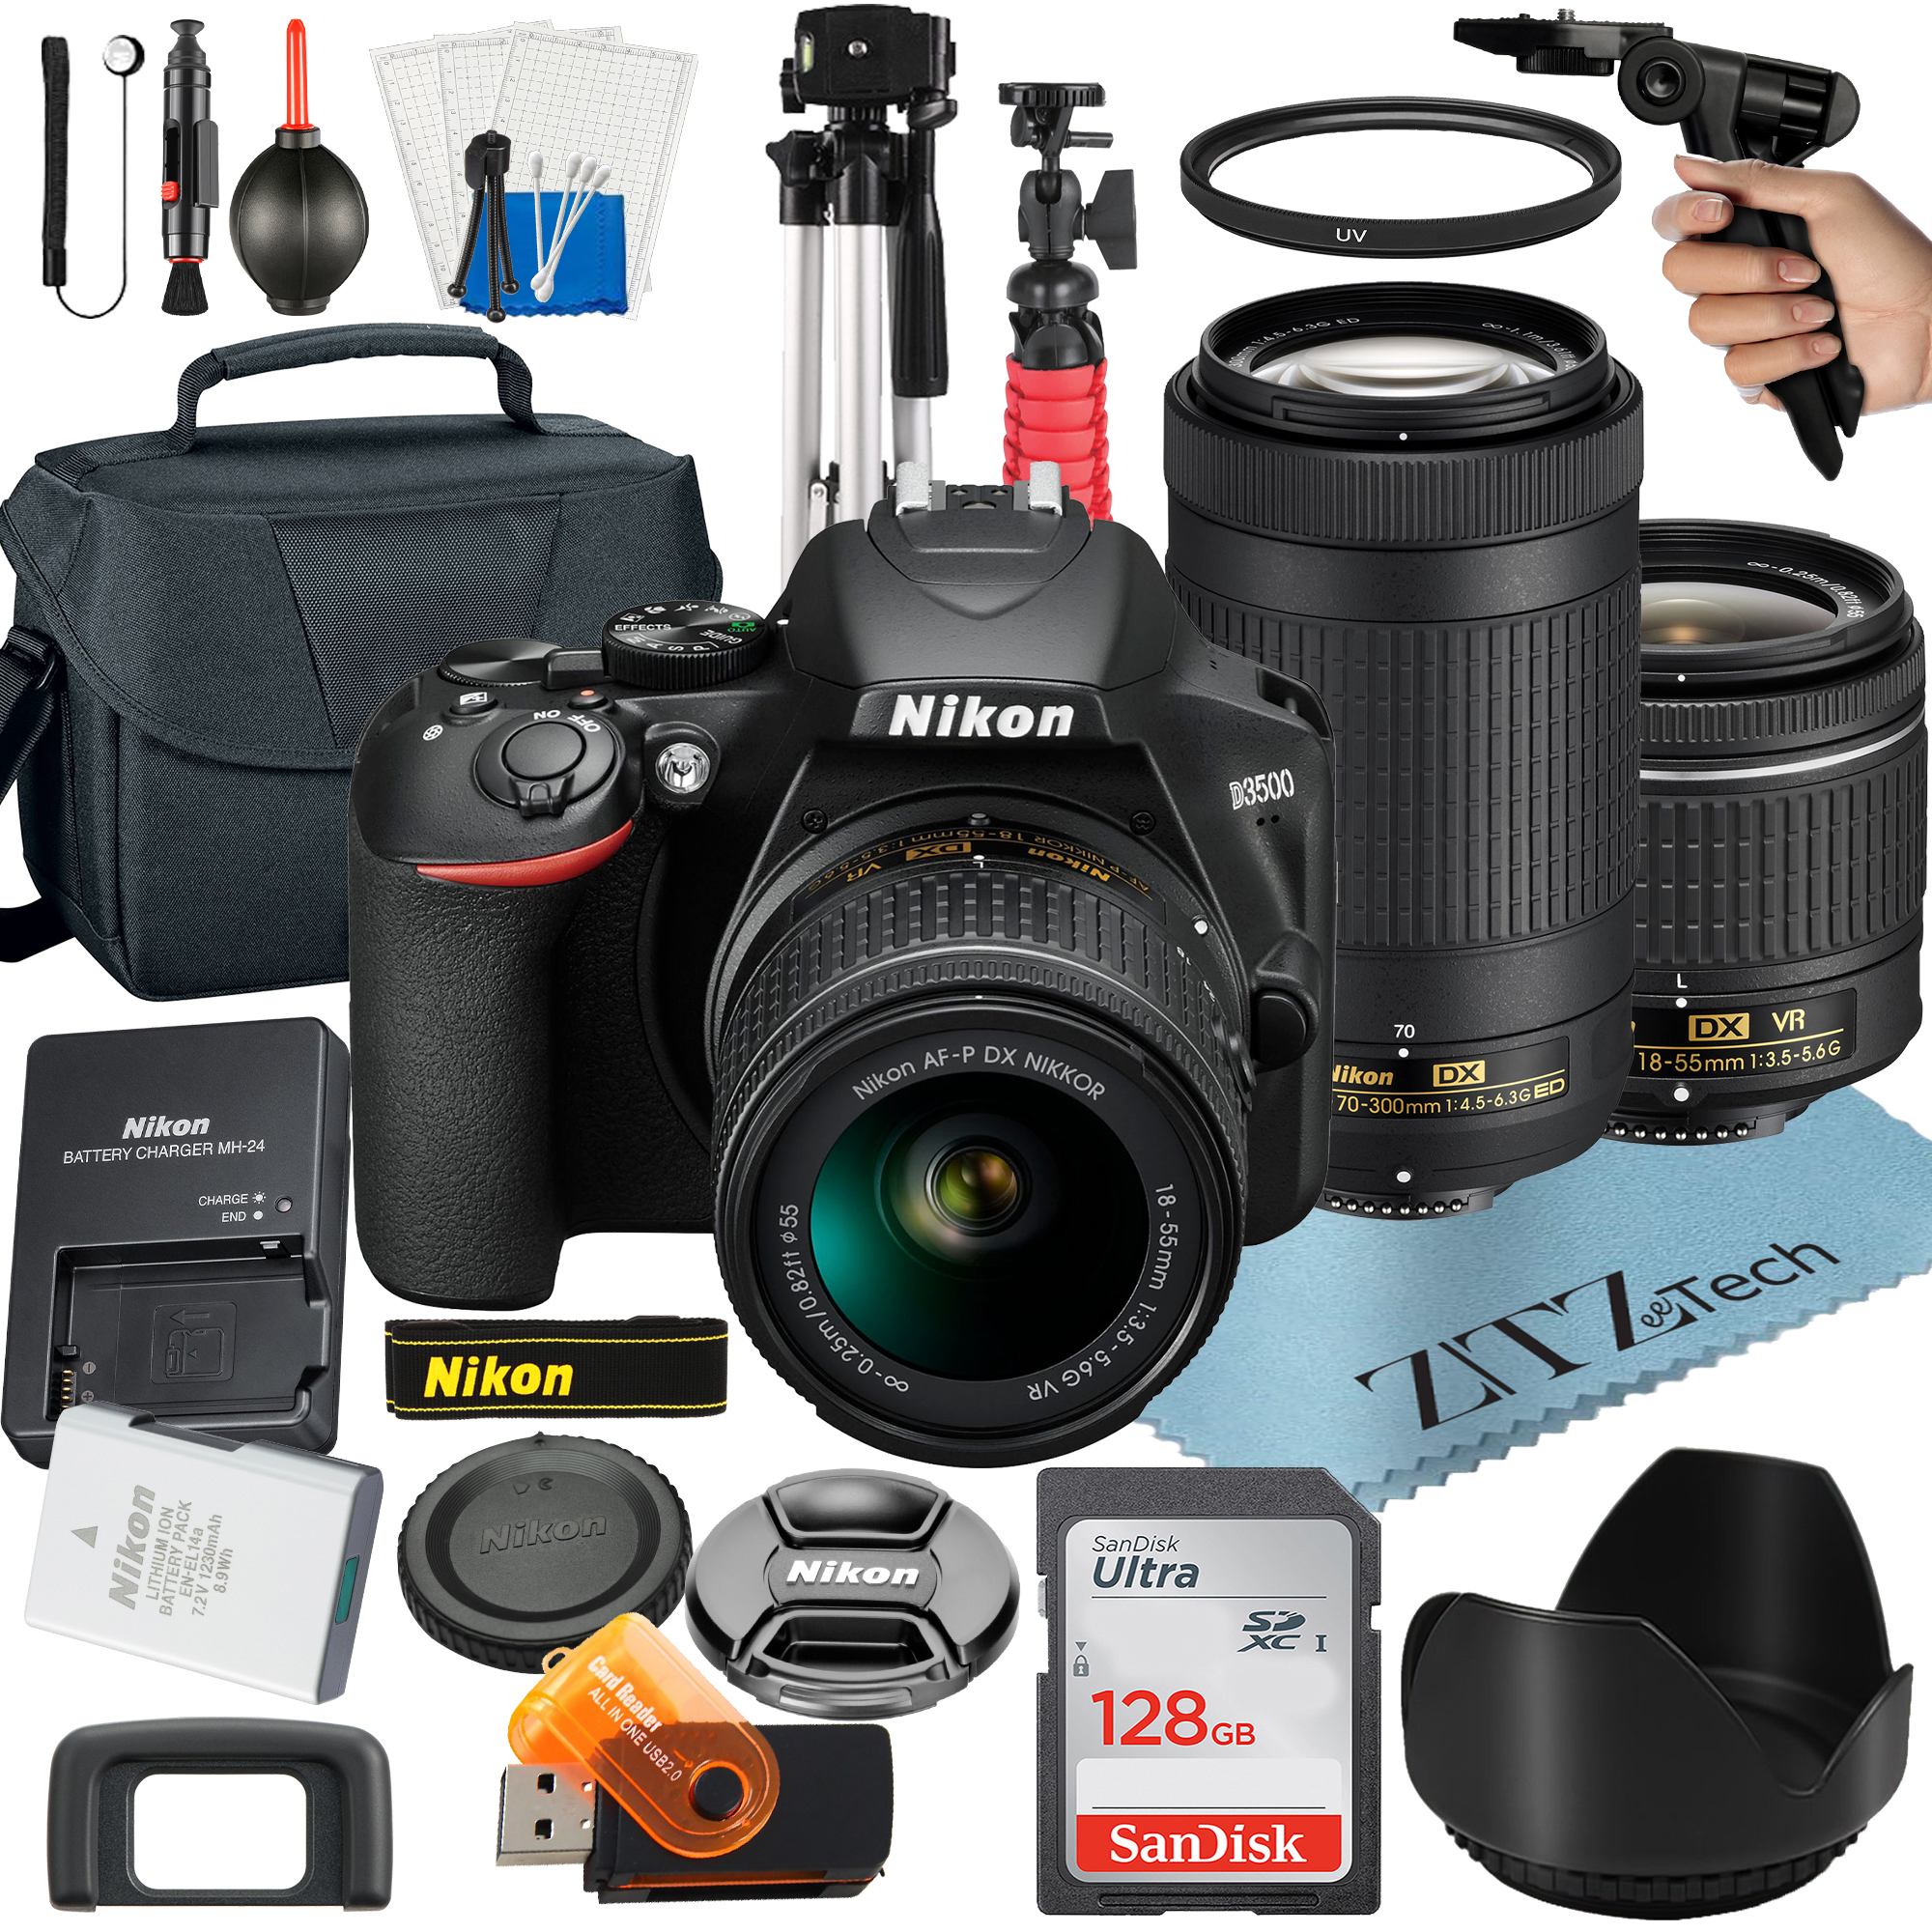 Nikon D3500 DSLR Camera Bundle with NIKKOR 18-55mm Lens + 70-300mm Lens + 128GB SanDisk Card + Case + Tripod + ZeeTech Accessory